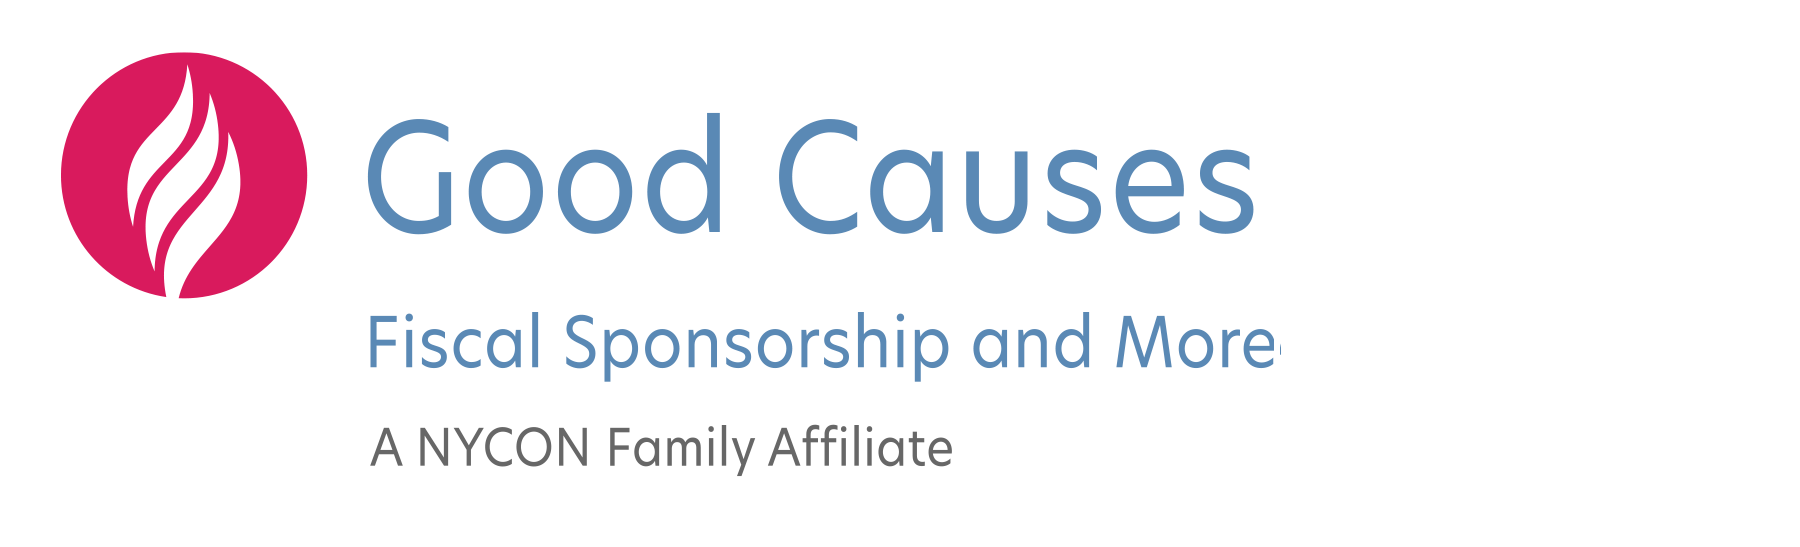 good causes logo